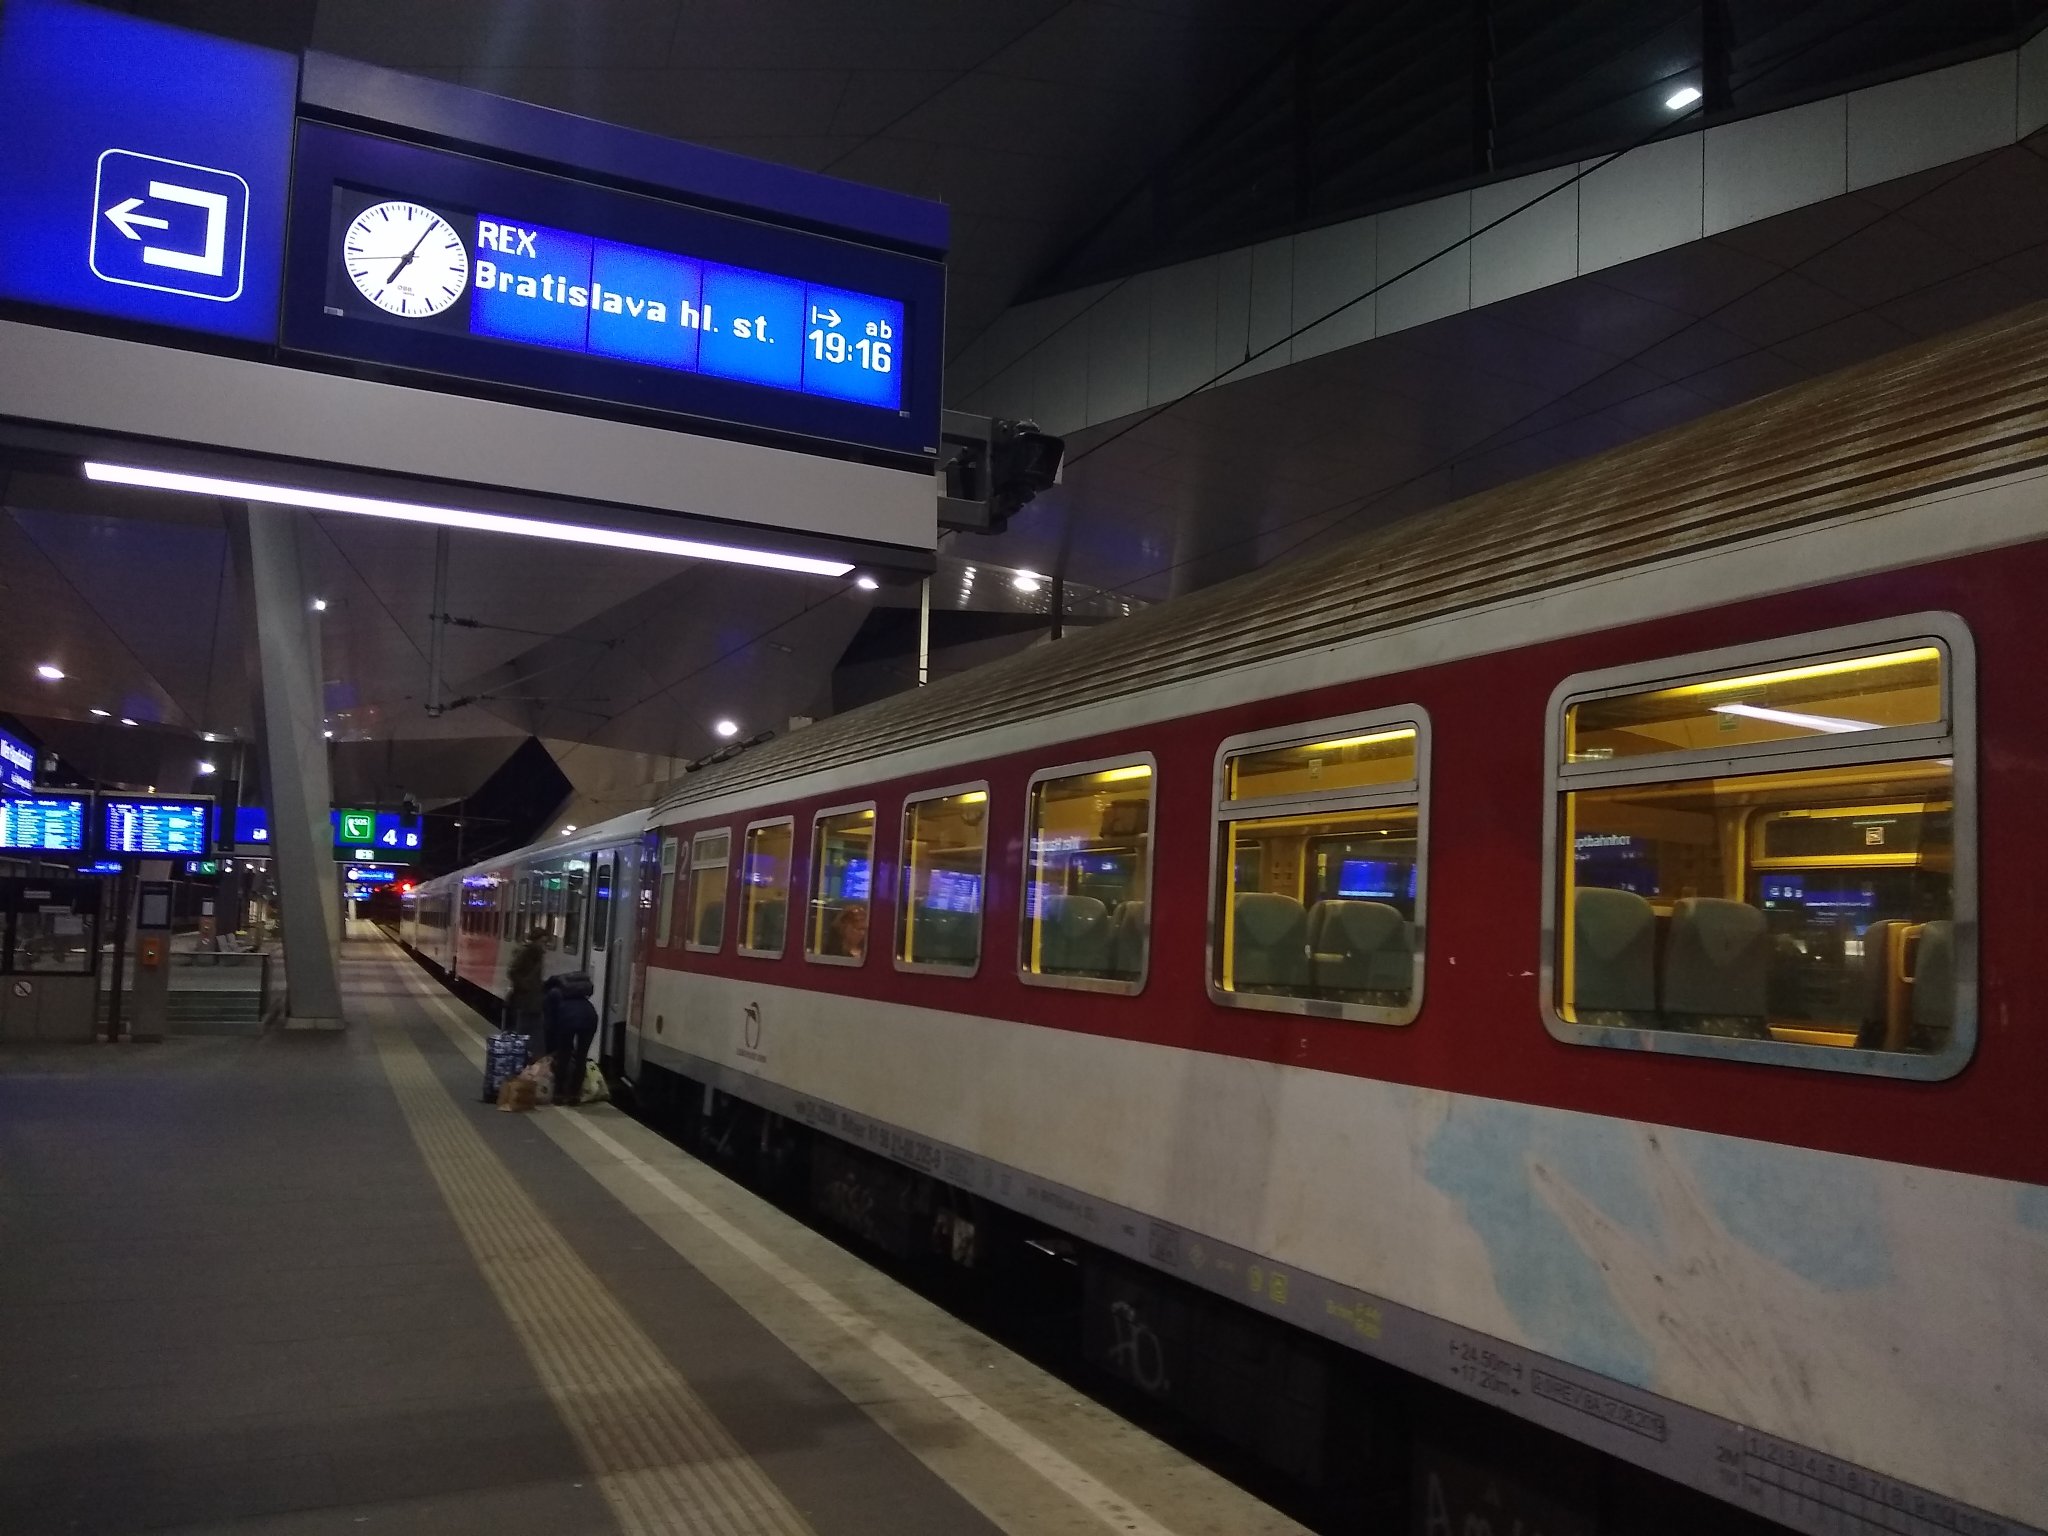 The REX to Bratislava waiting at platform 4